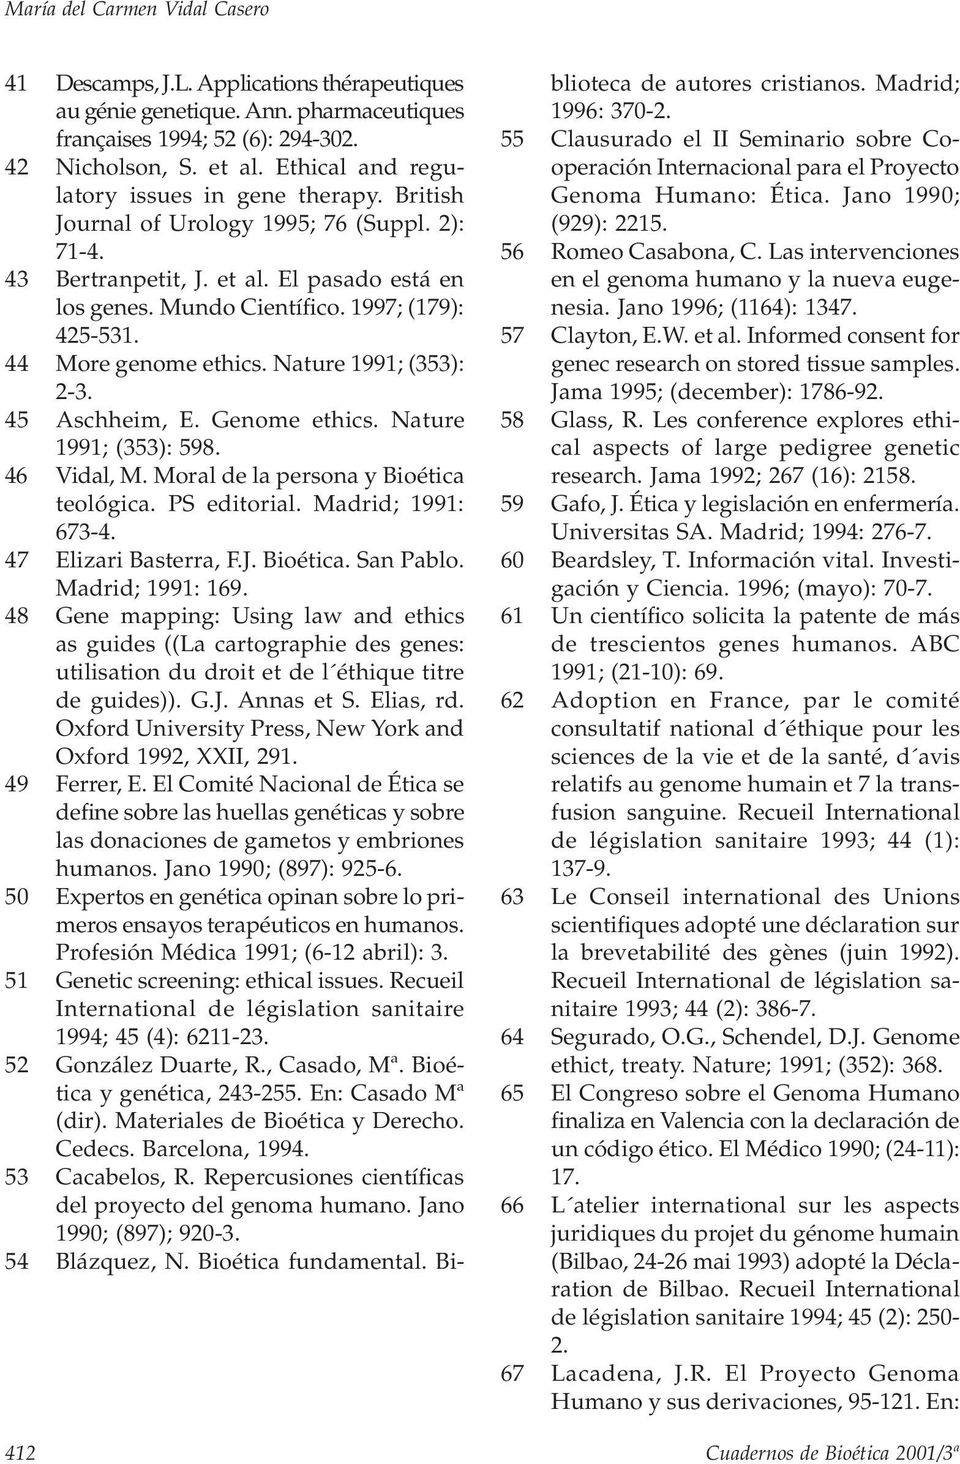 44 More genome ethics. Nature 1991; (353): 2-3. 45 Aschheim, E. Genome ethics. Nature 1991; (353): 598. 46 Vidal, M. Moral de la persona y Bioética teológica. PS editorial. Madrid; 1991: 673-4.